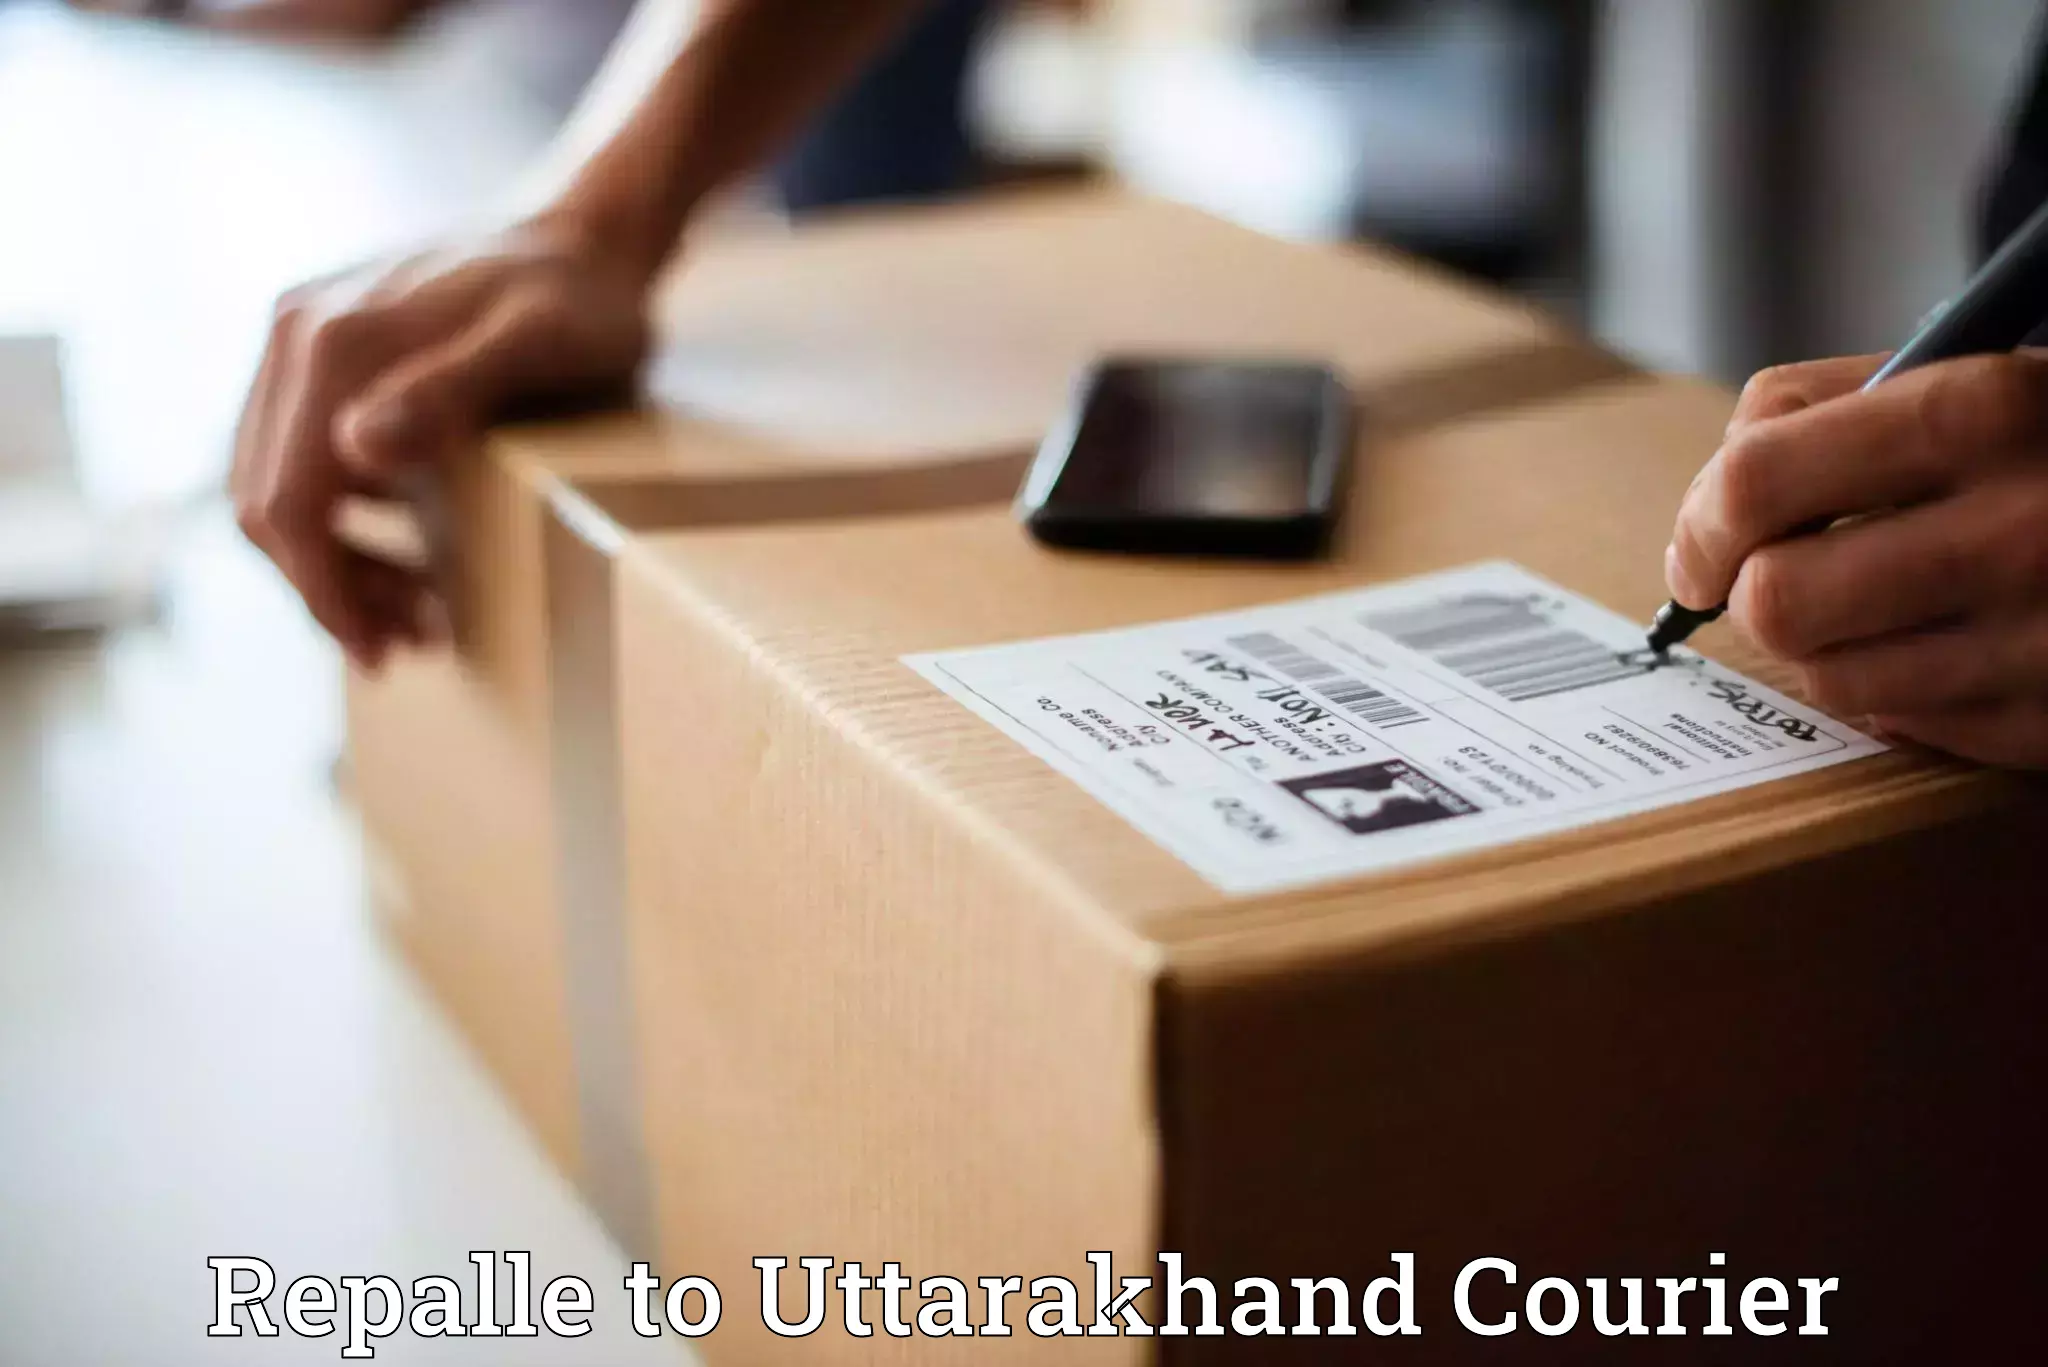 High-capacity parcel service Repalle to Kotdwara